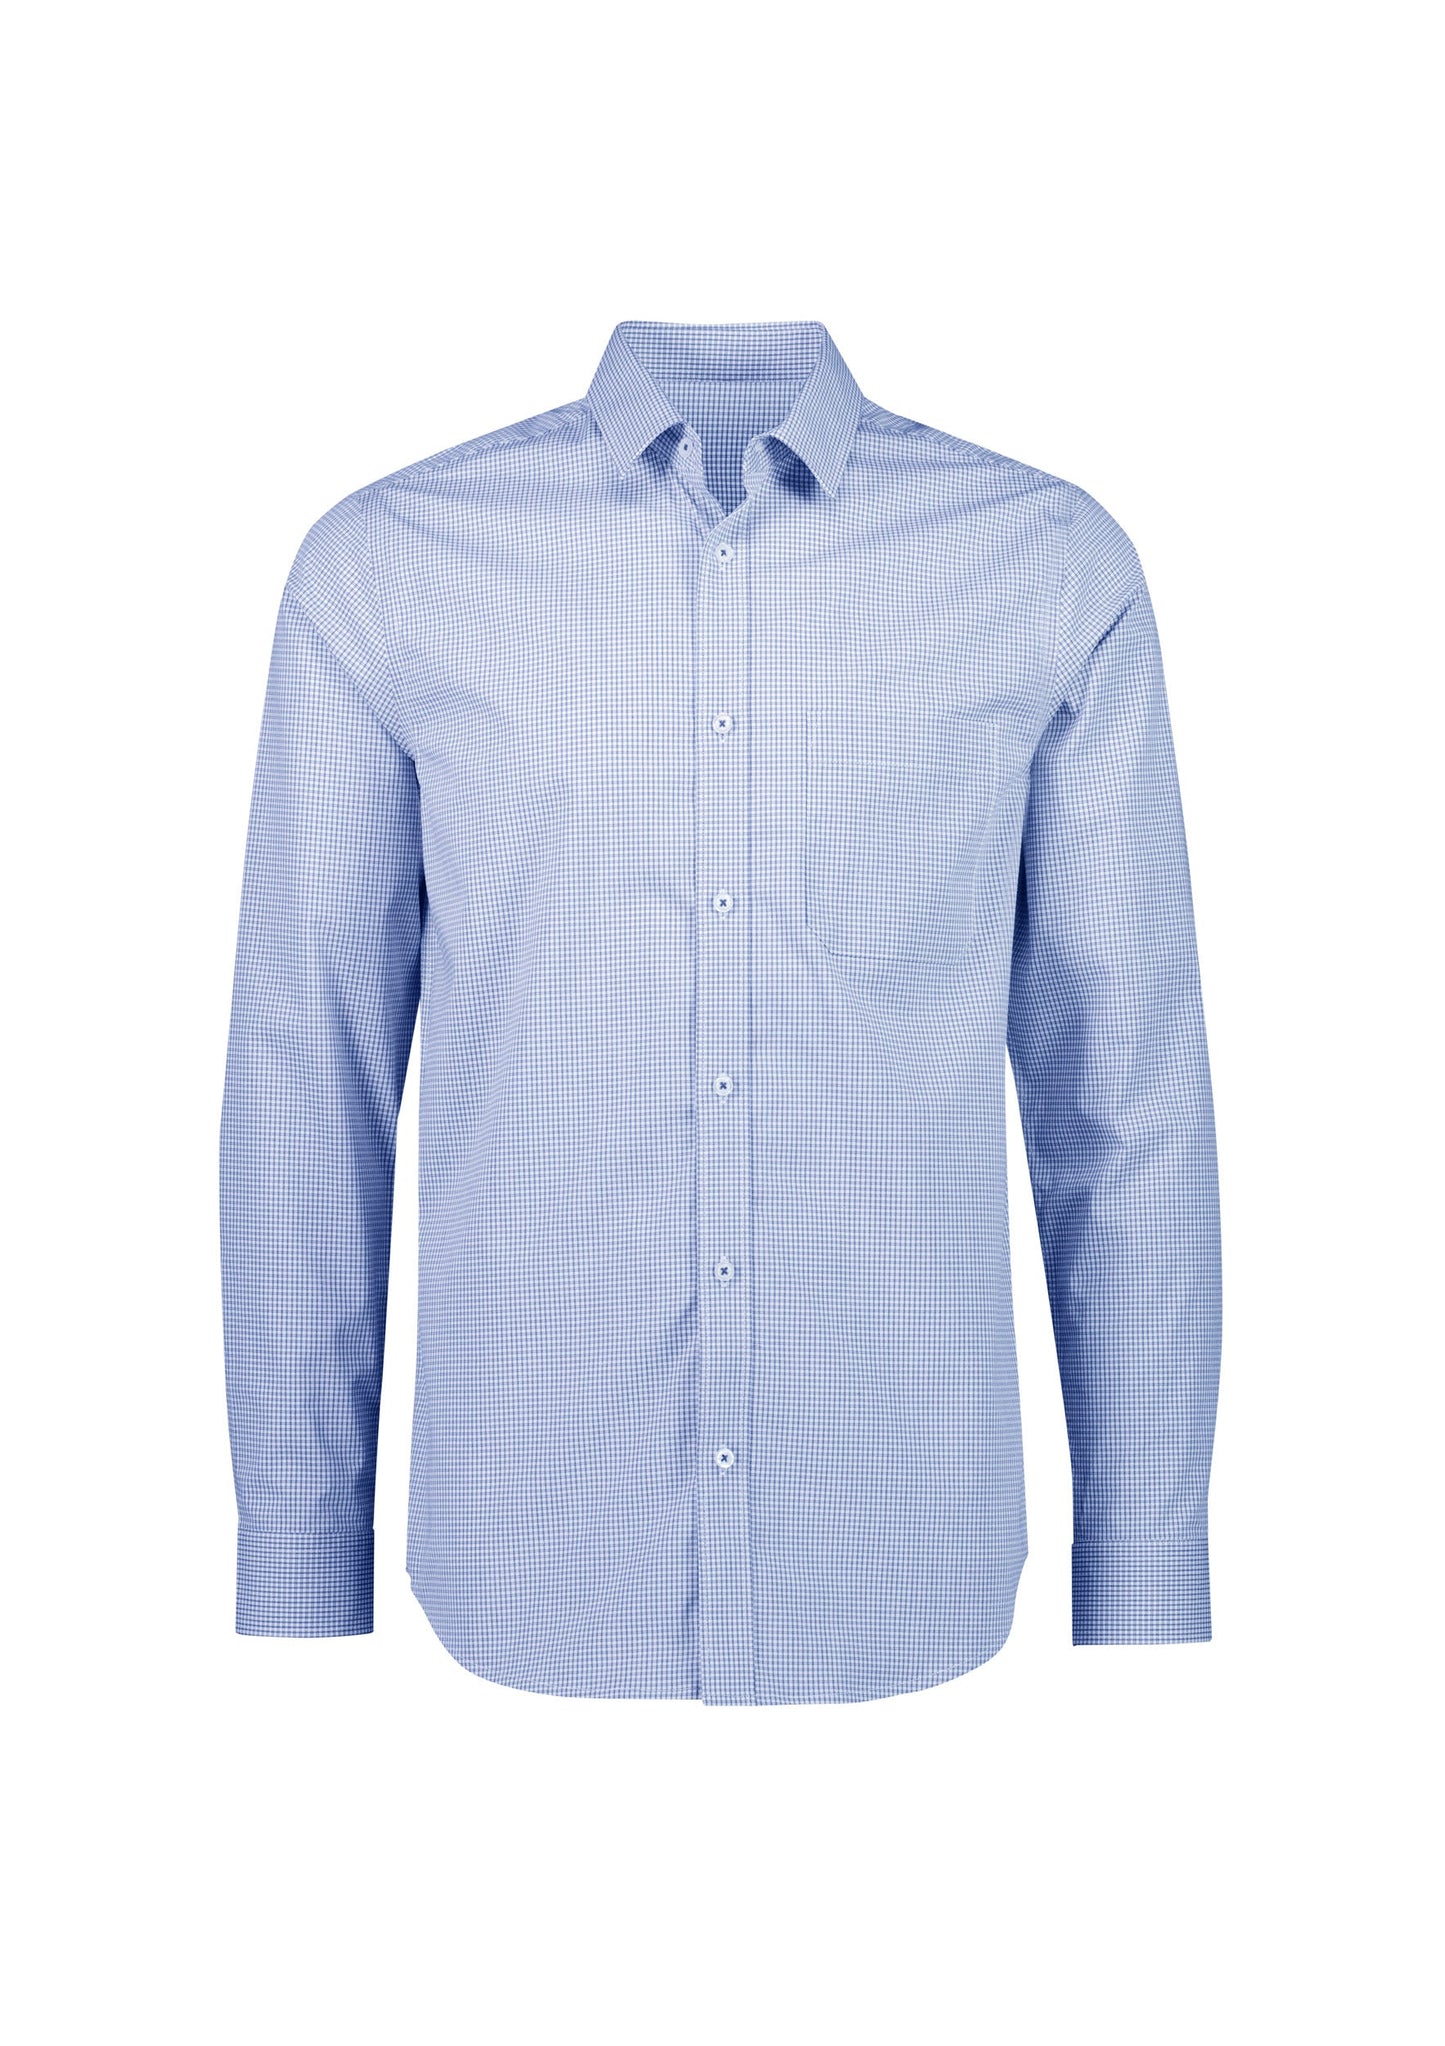 Biz Collection Men's Bristol Classic Long Sleeve Shirt S338ML